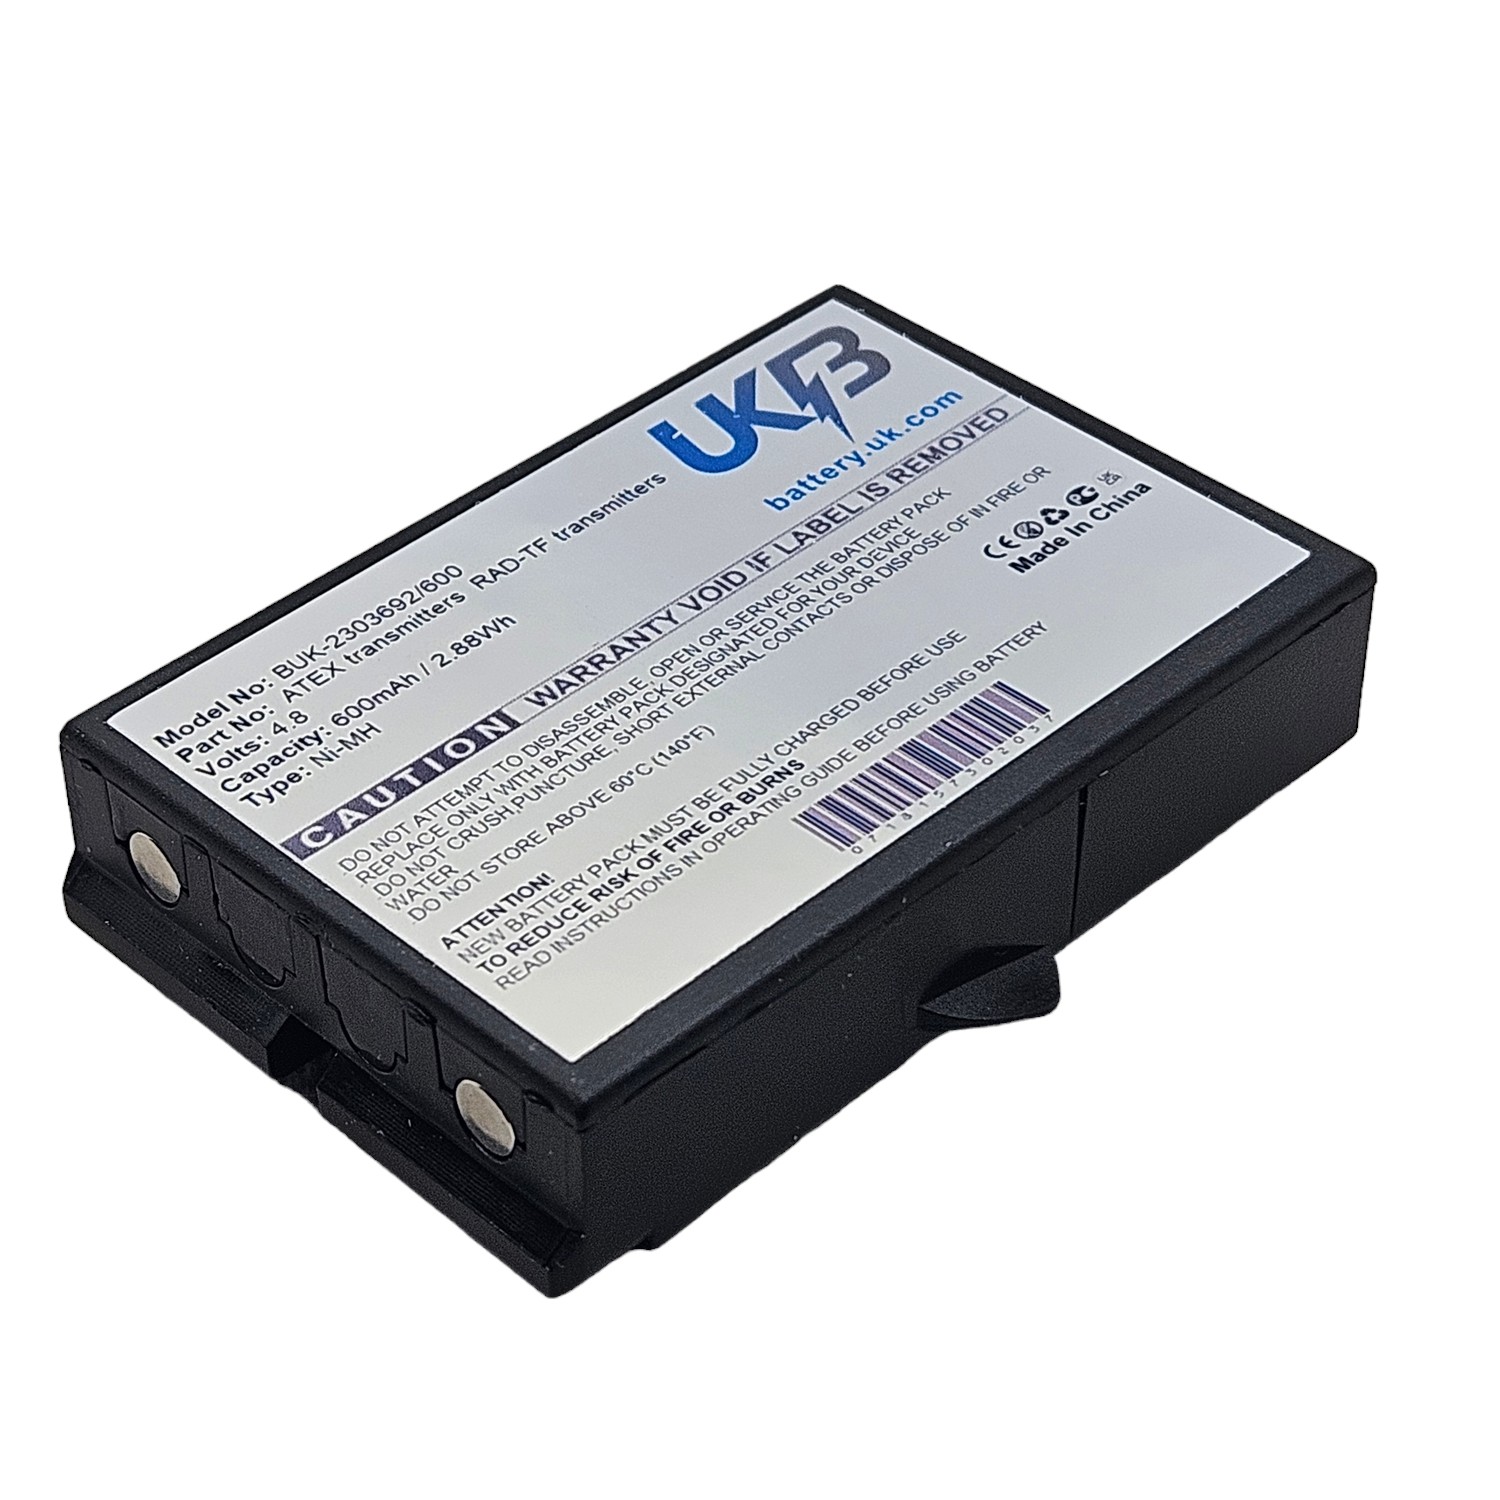 IKUSI TM70/iK2.13B LV Compatible Replacement Battery